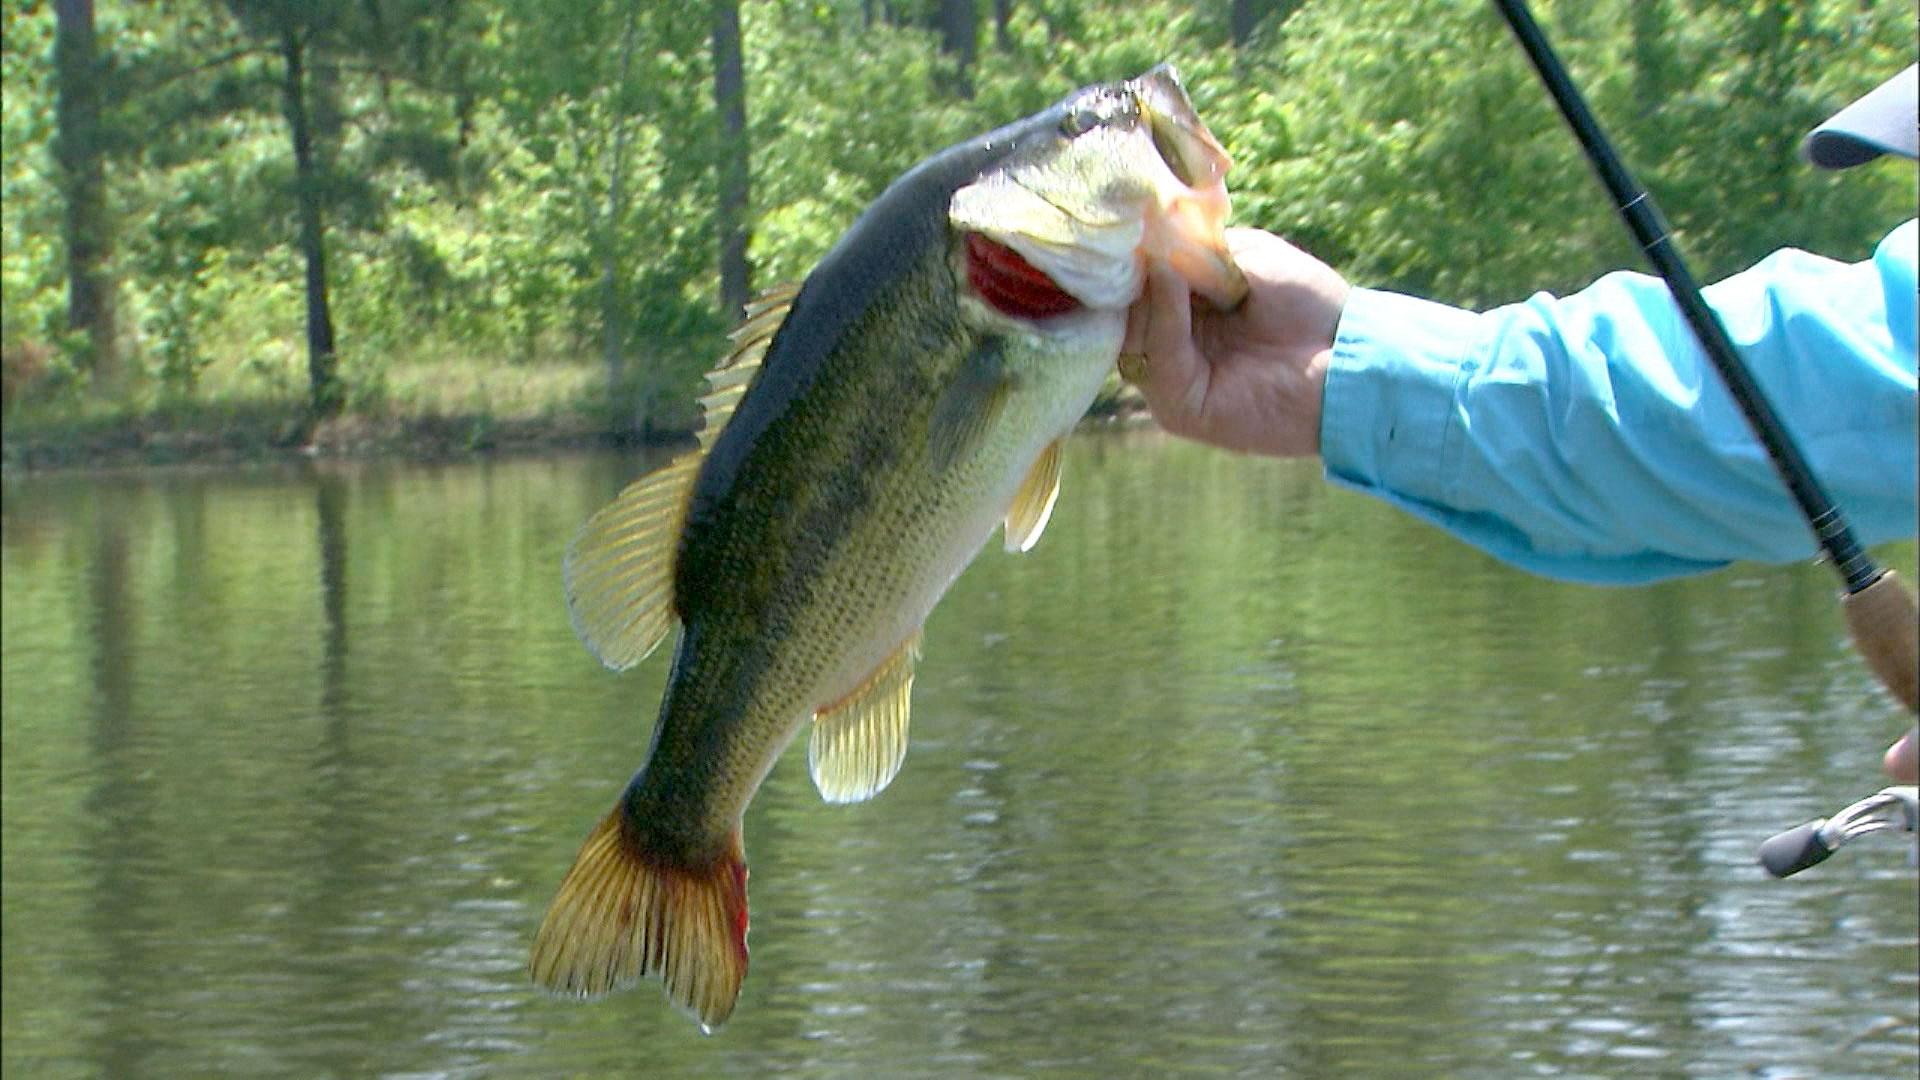 Carolina Outdoor Journal, Lizards and Bass Fishing, Season 6, Episode 13